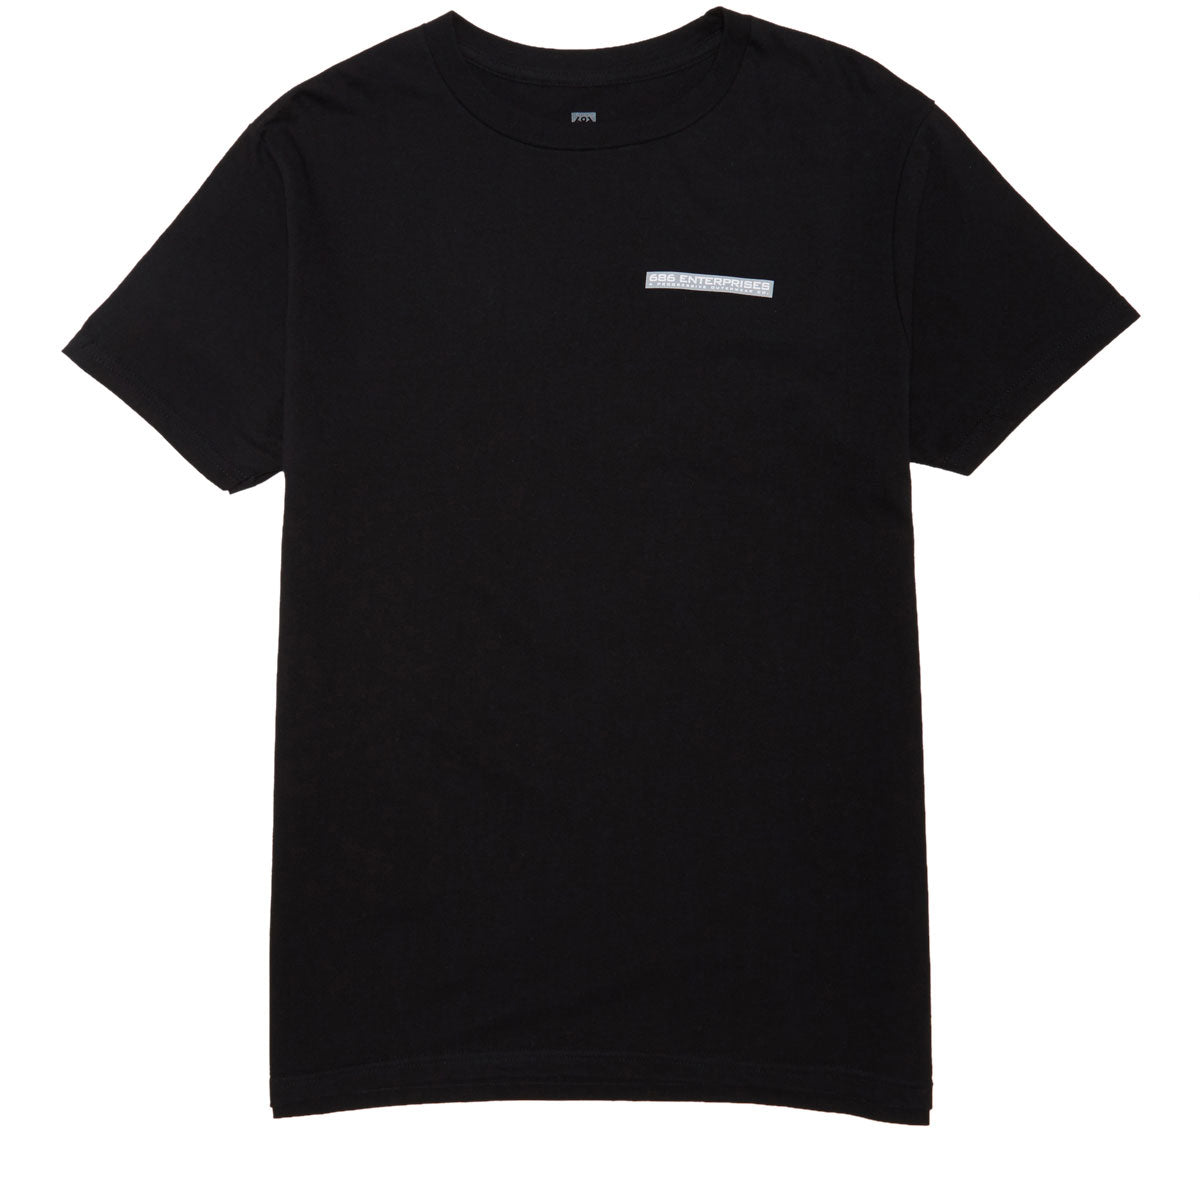 686 Global Enterprises T-Shirt - Black image 2